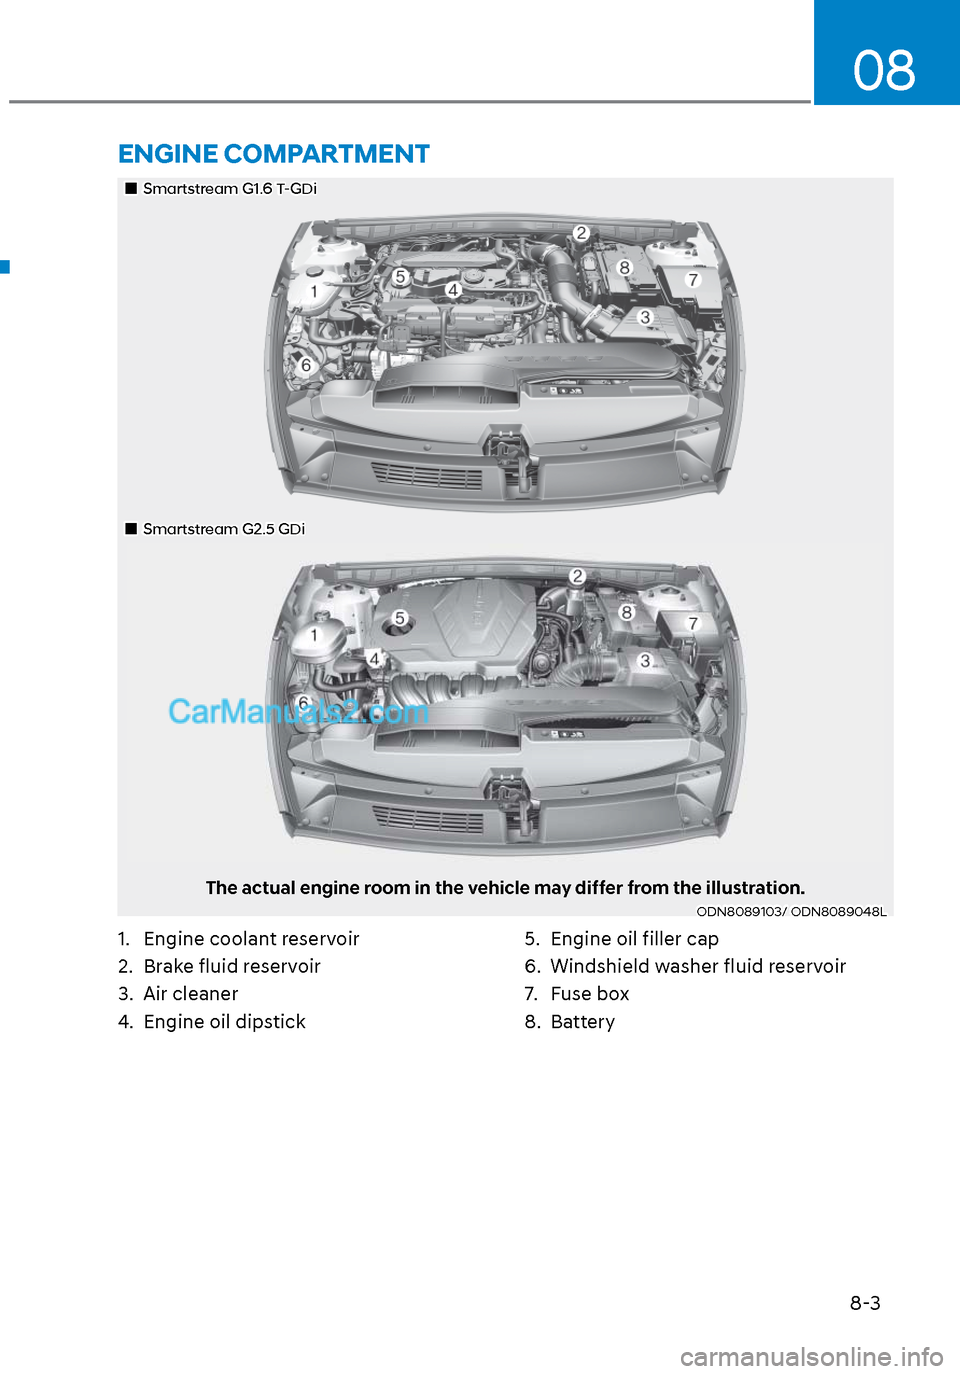 Hyundai Sonata 2020  Owners Manual 8-3
08
1.  Engine coolant reservoir
2.  Brake fluid reservoir 
3. Air cleaner
4.  Engine oil dipstick5.  Engine oil filler cap
6.  Windshield washer fluid reservoir
7. Fuse box
8. Battery
ENGINE COMPA